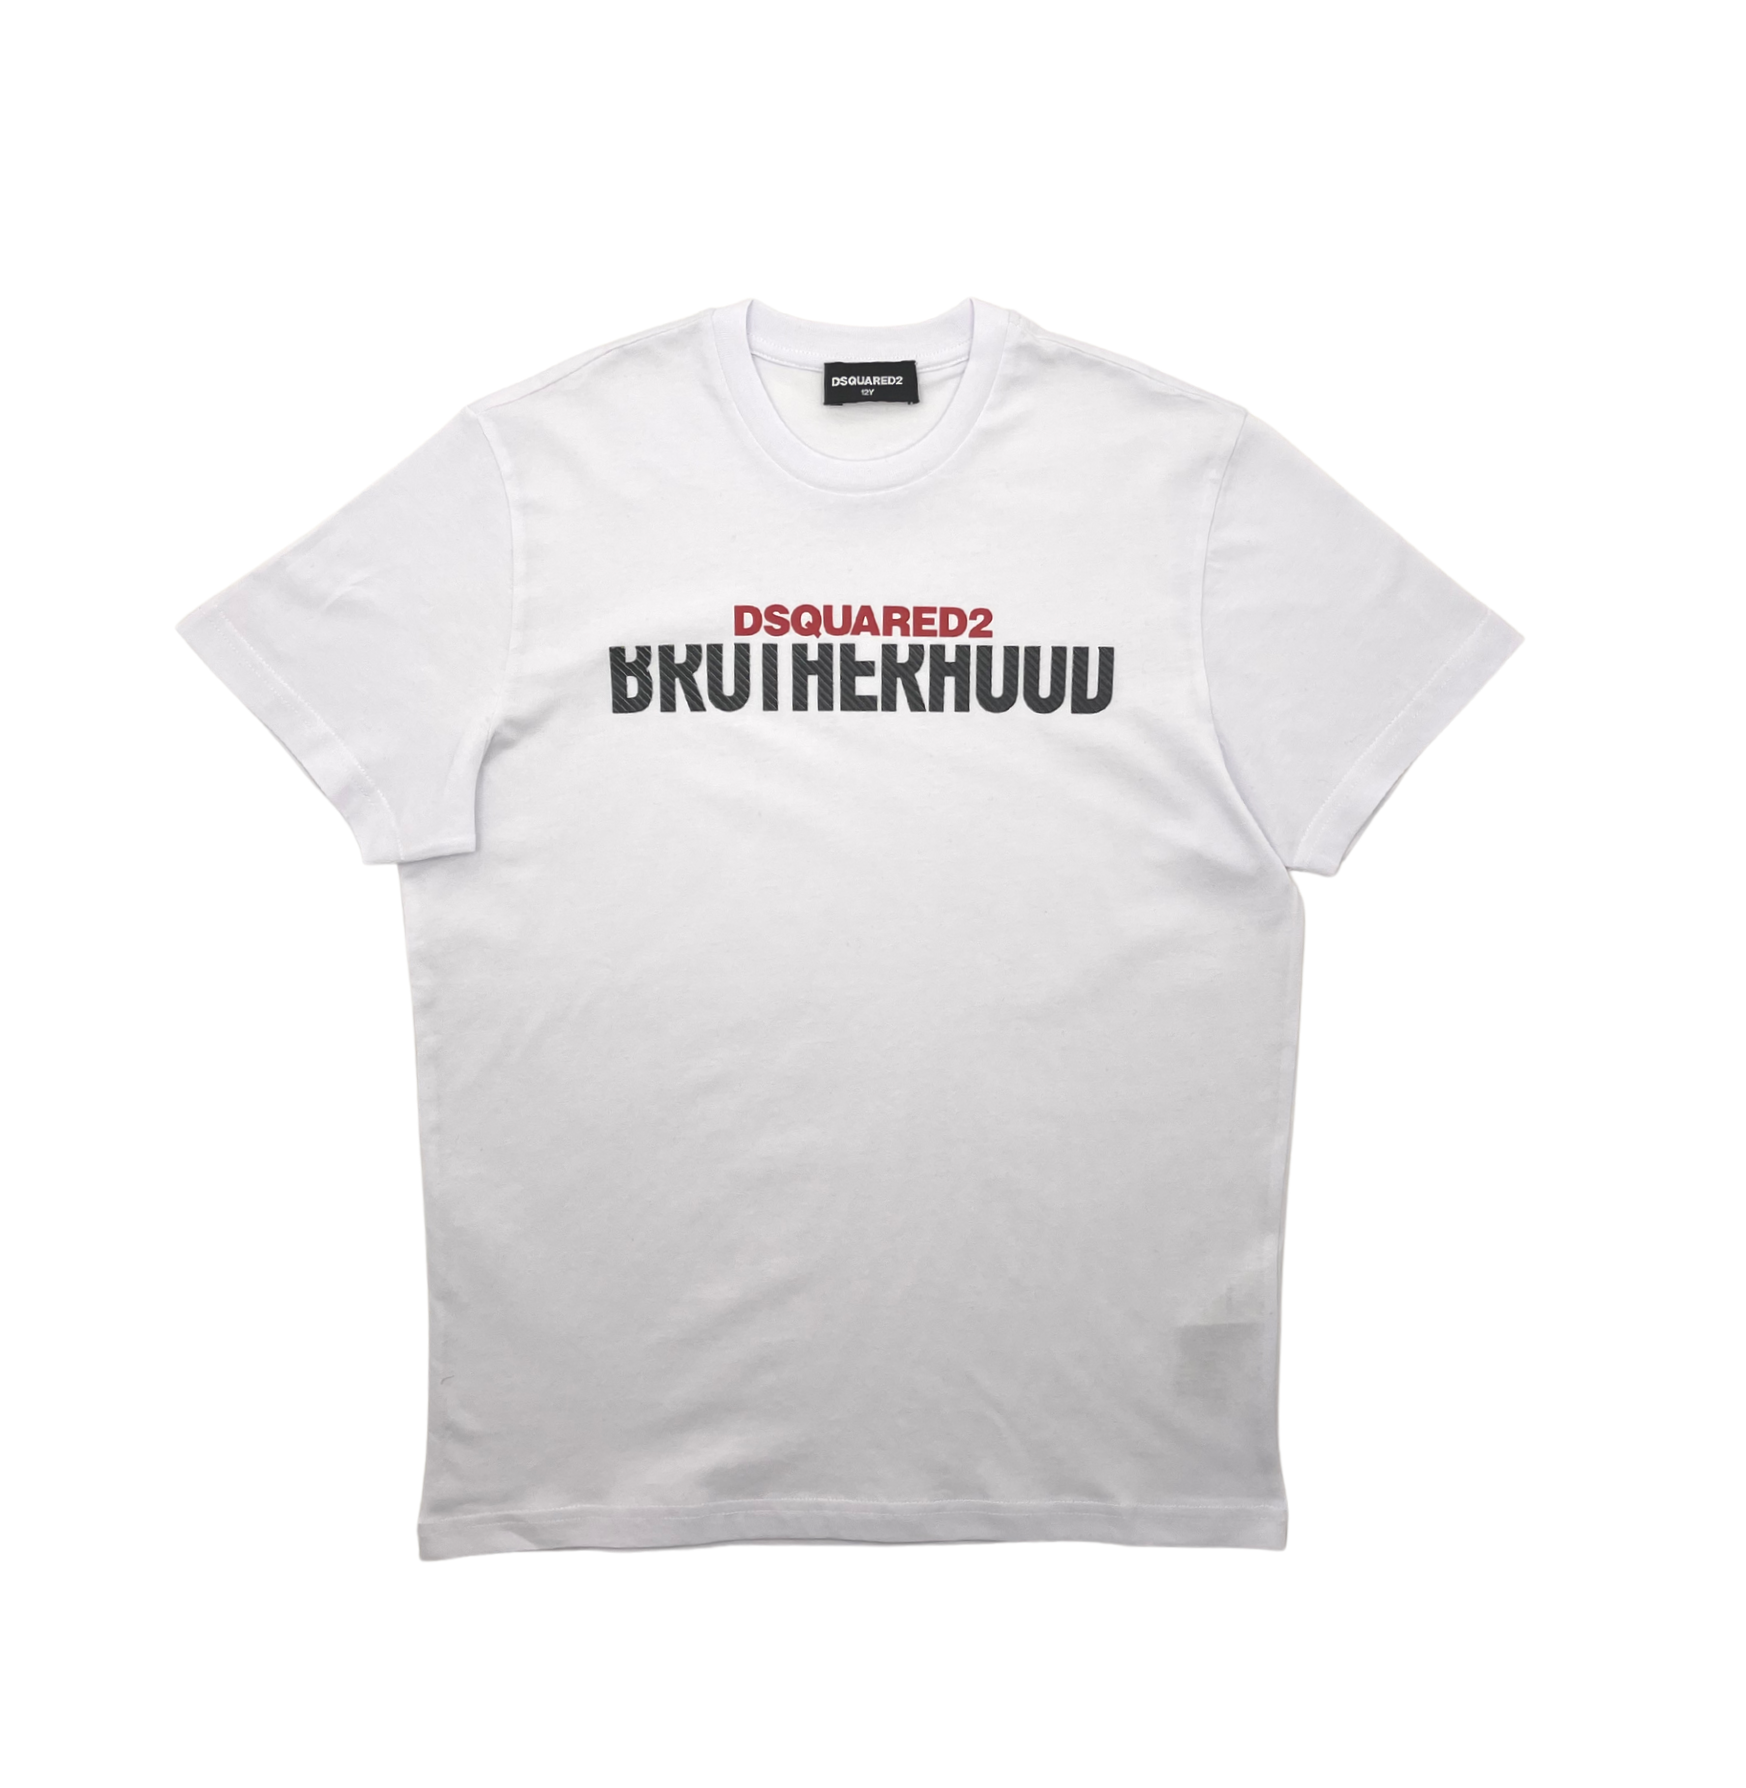 DSQUARED2 - T-shirt Brotherhood - 12 ans